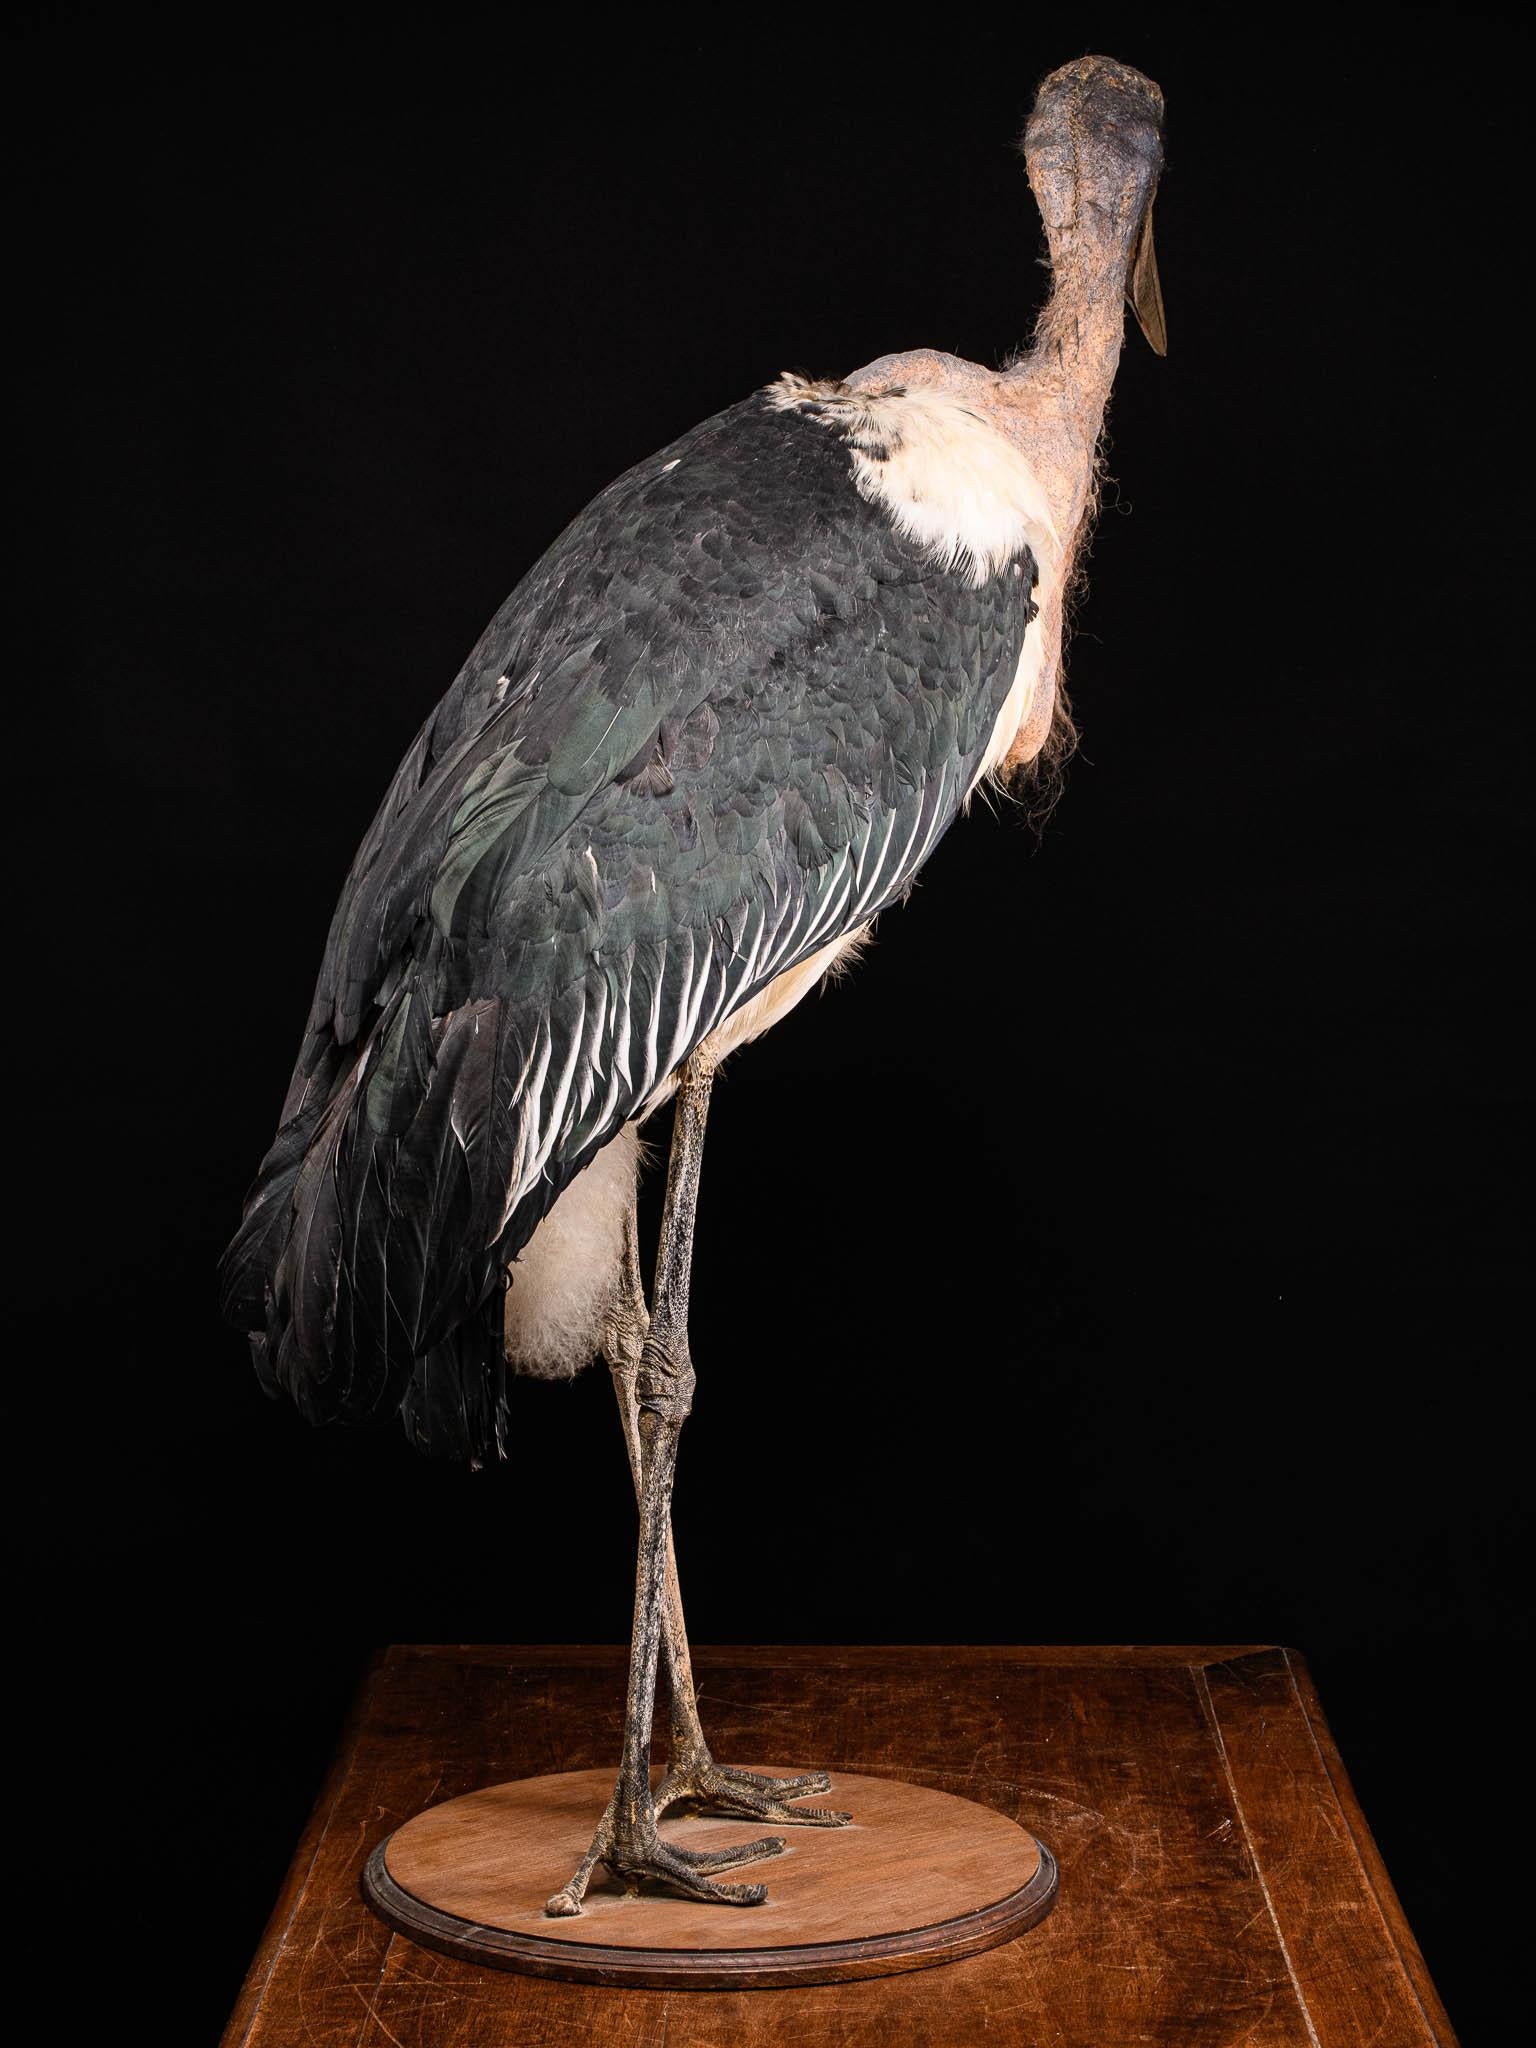 marabou stork size